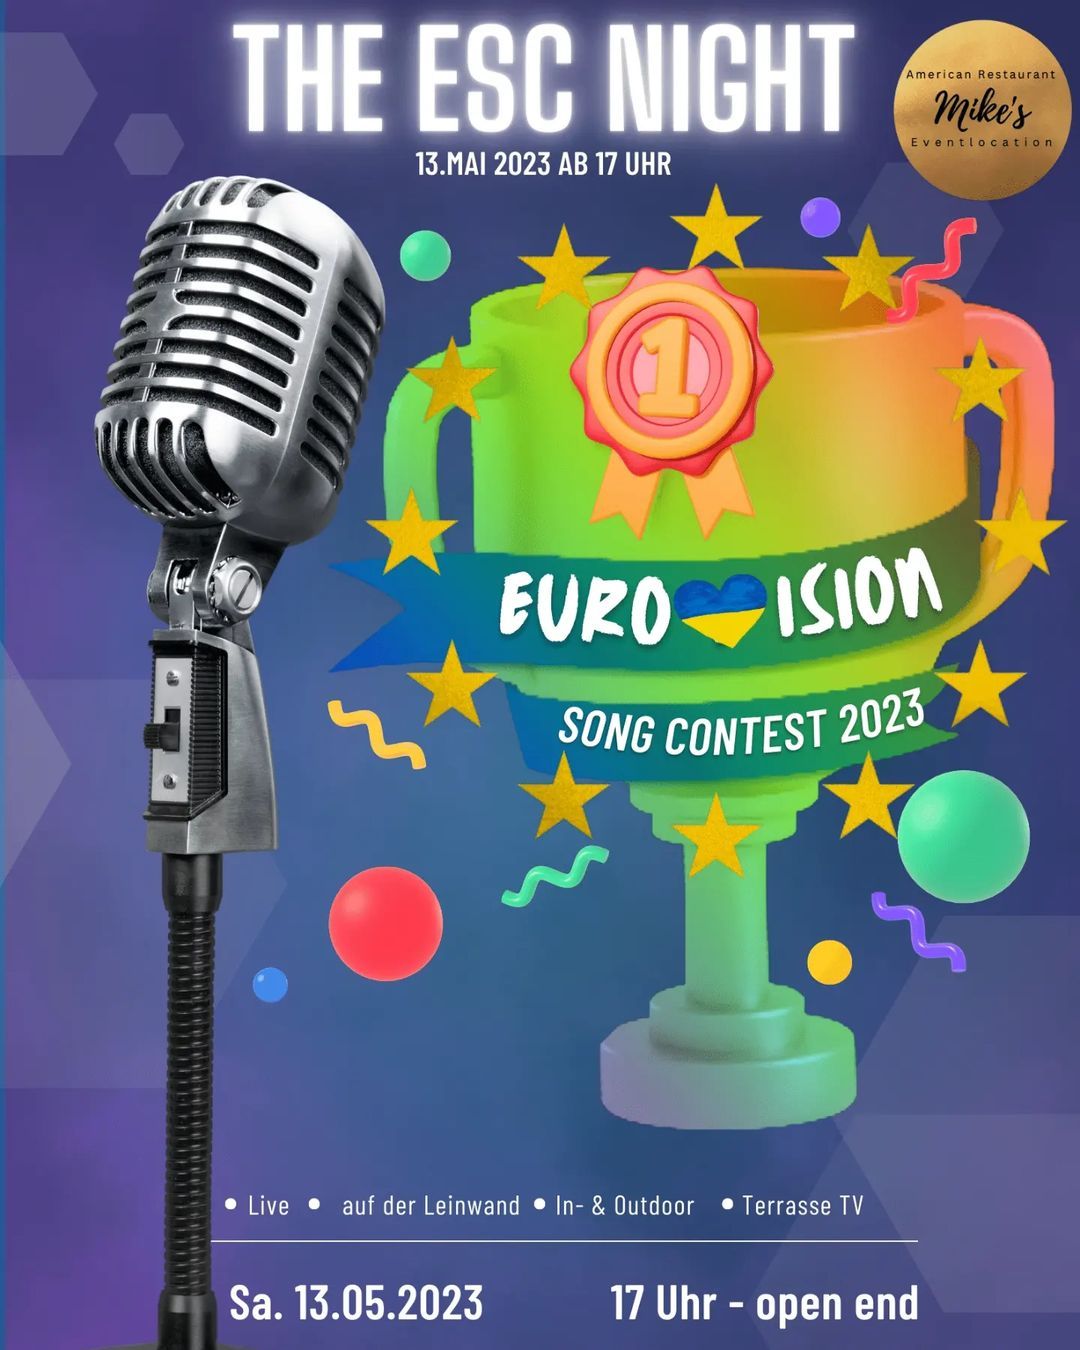 #eurovision song Contest #esc2023 #Party live in #Siegburg am 13.05.2023
#esc #siegburgkaldauen (hier: Mike’s - American Restaurant & Eventlocation)
https://www.instagram.com/p/Cpe5WEqtyOV/?igshid=NGJjMDIxMWI=